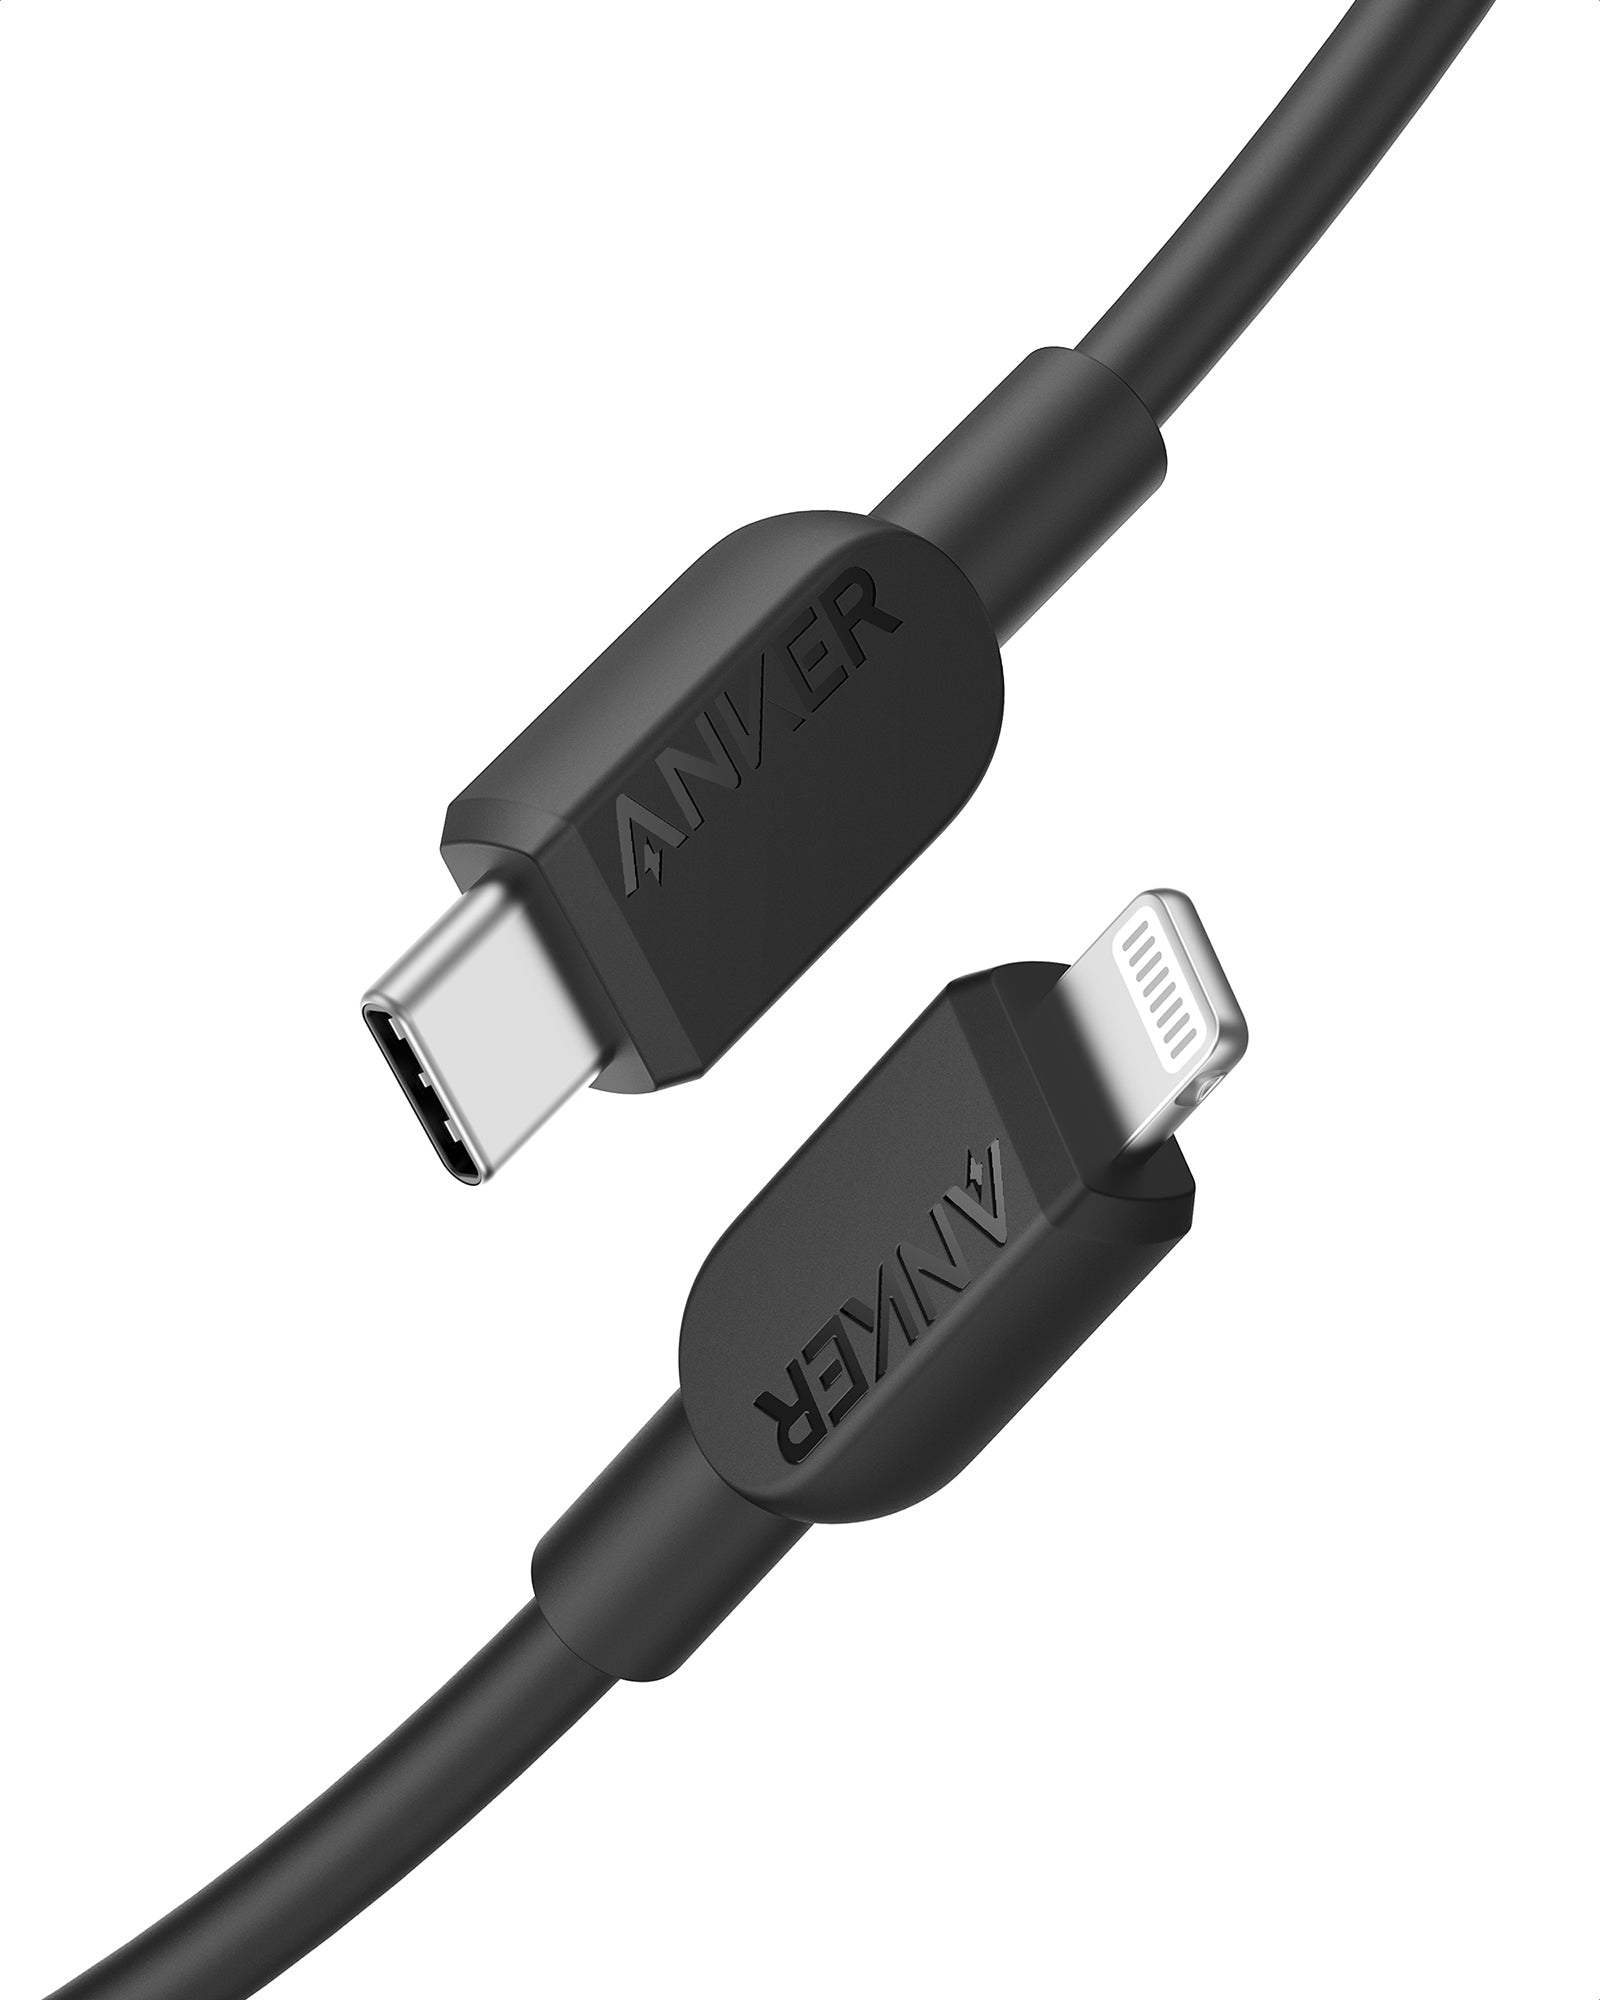 Anker <b>321</b> USB-C to Lightning Cable (3 ft / 6 ft)